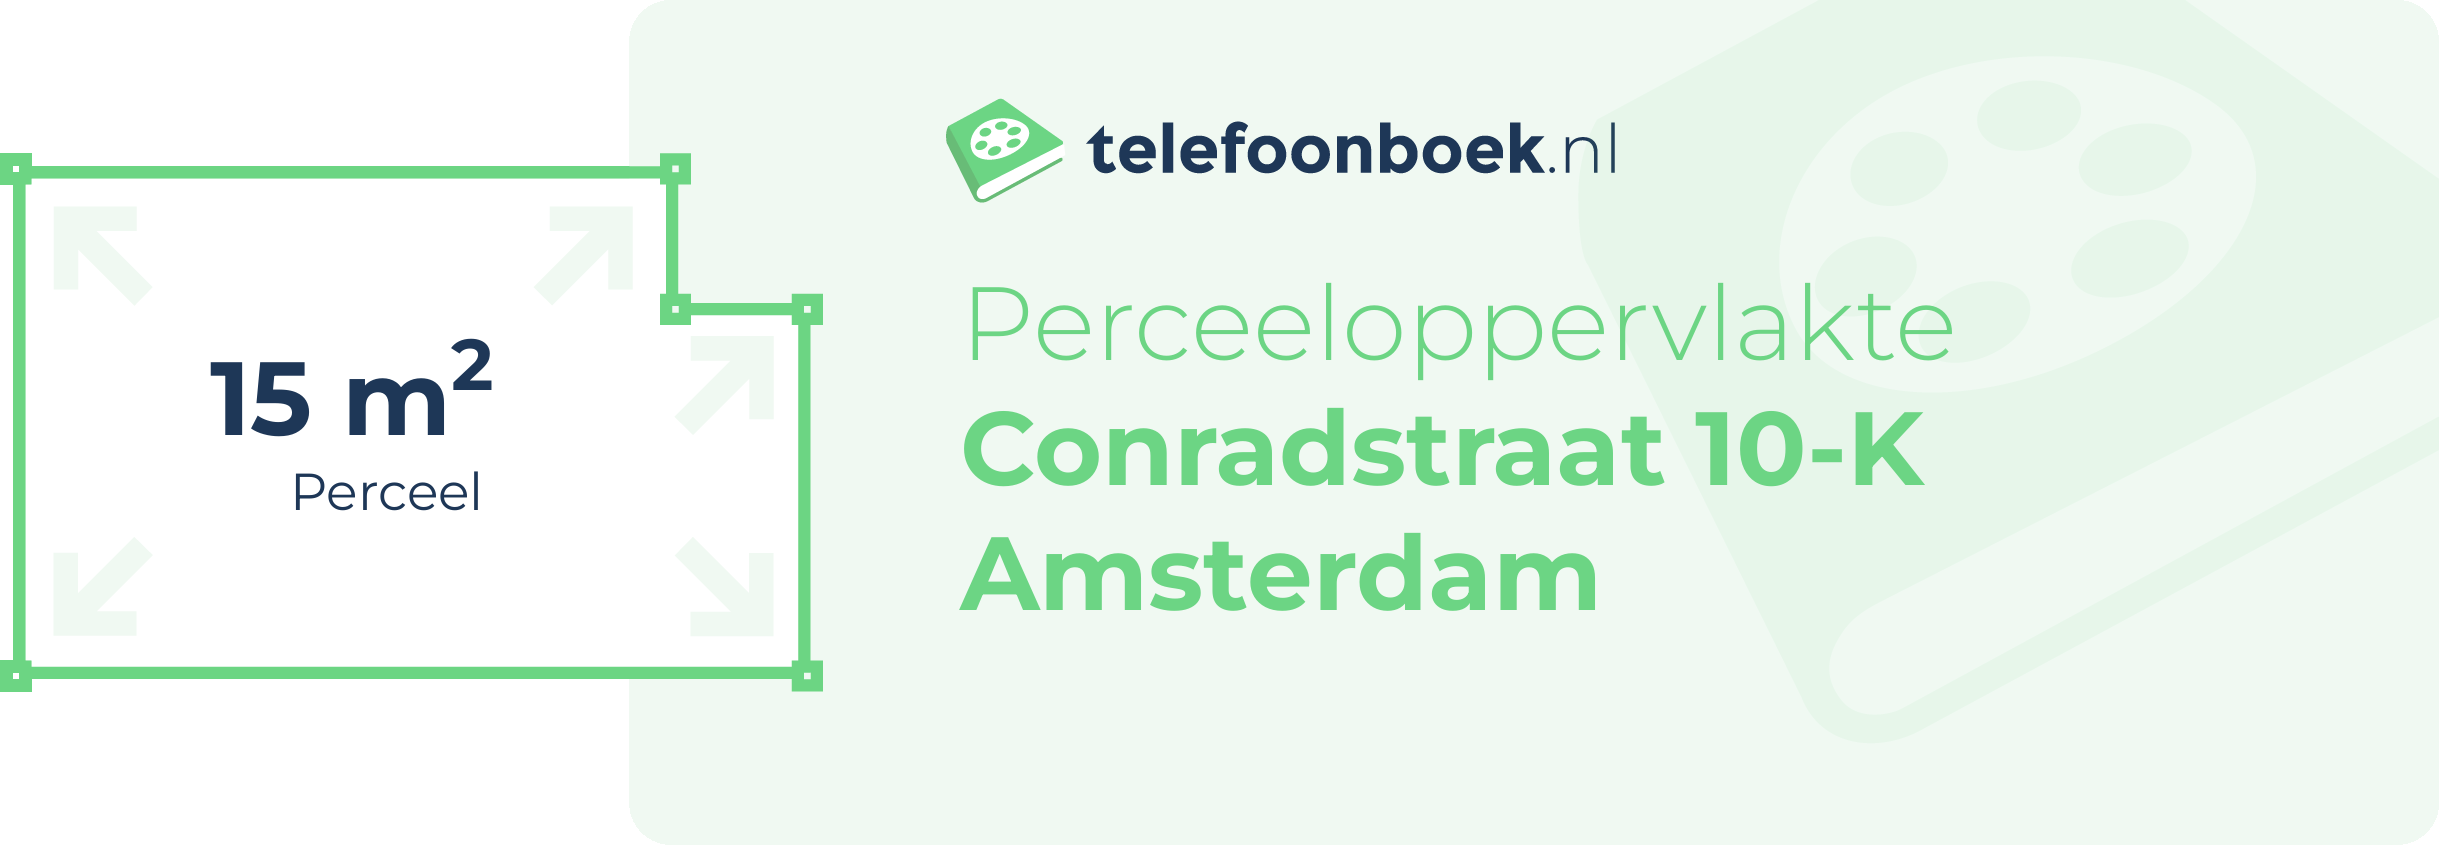 Perceeloppervlakte Conradstraat 10-K Amsterdam